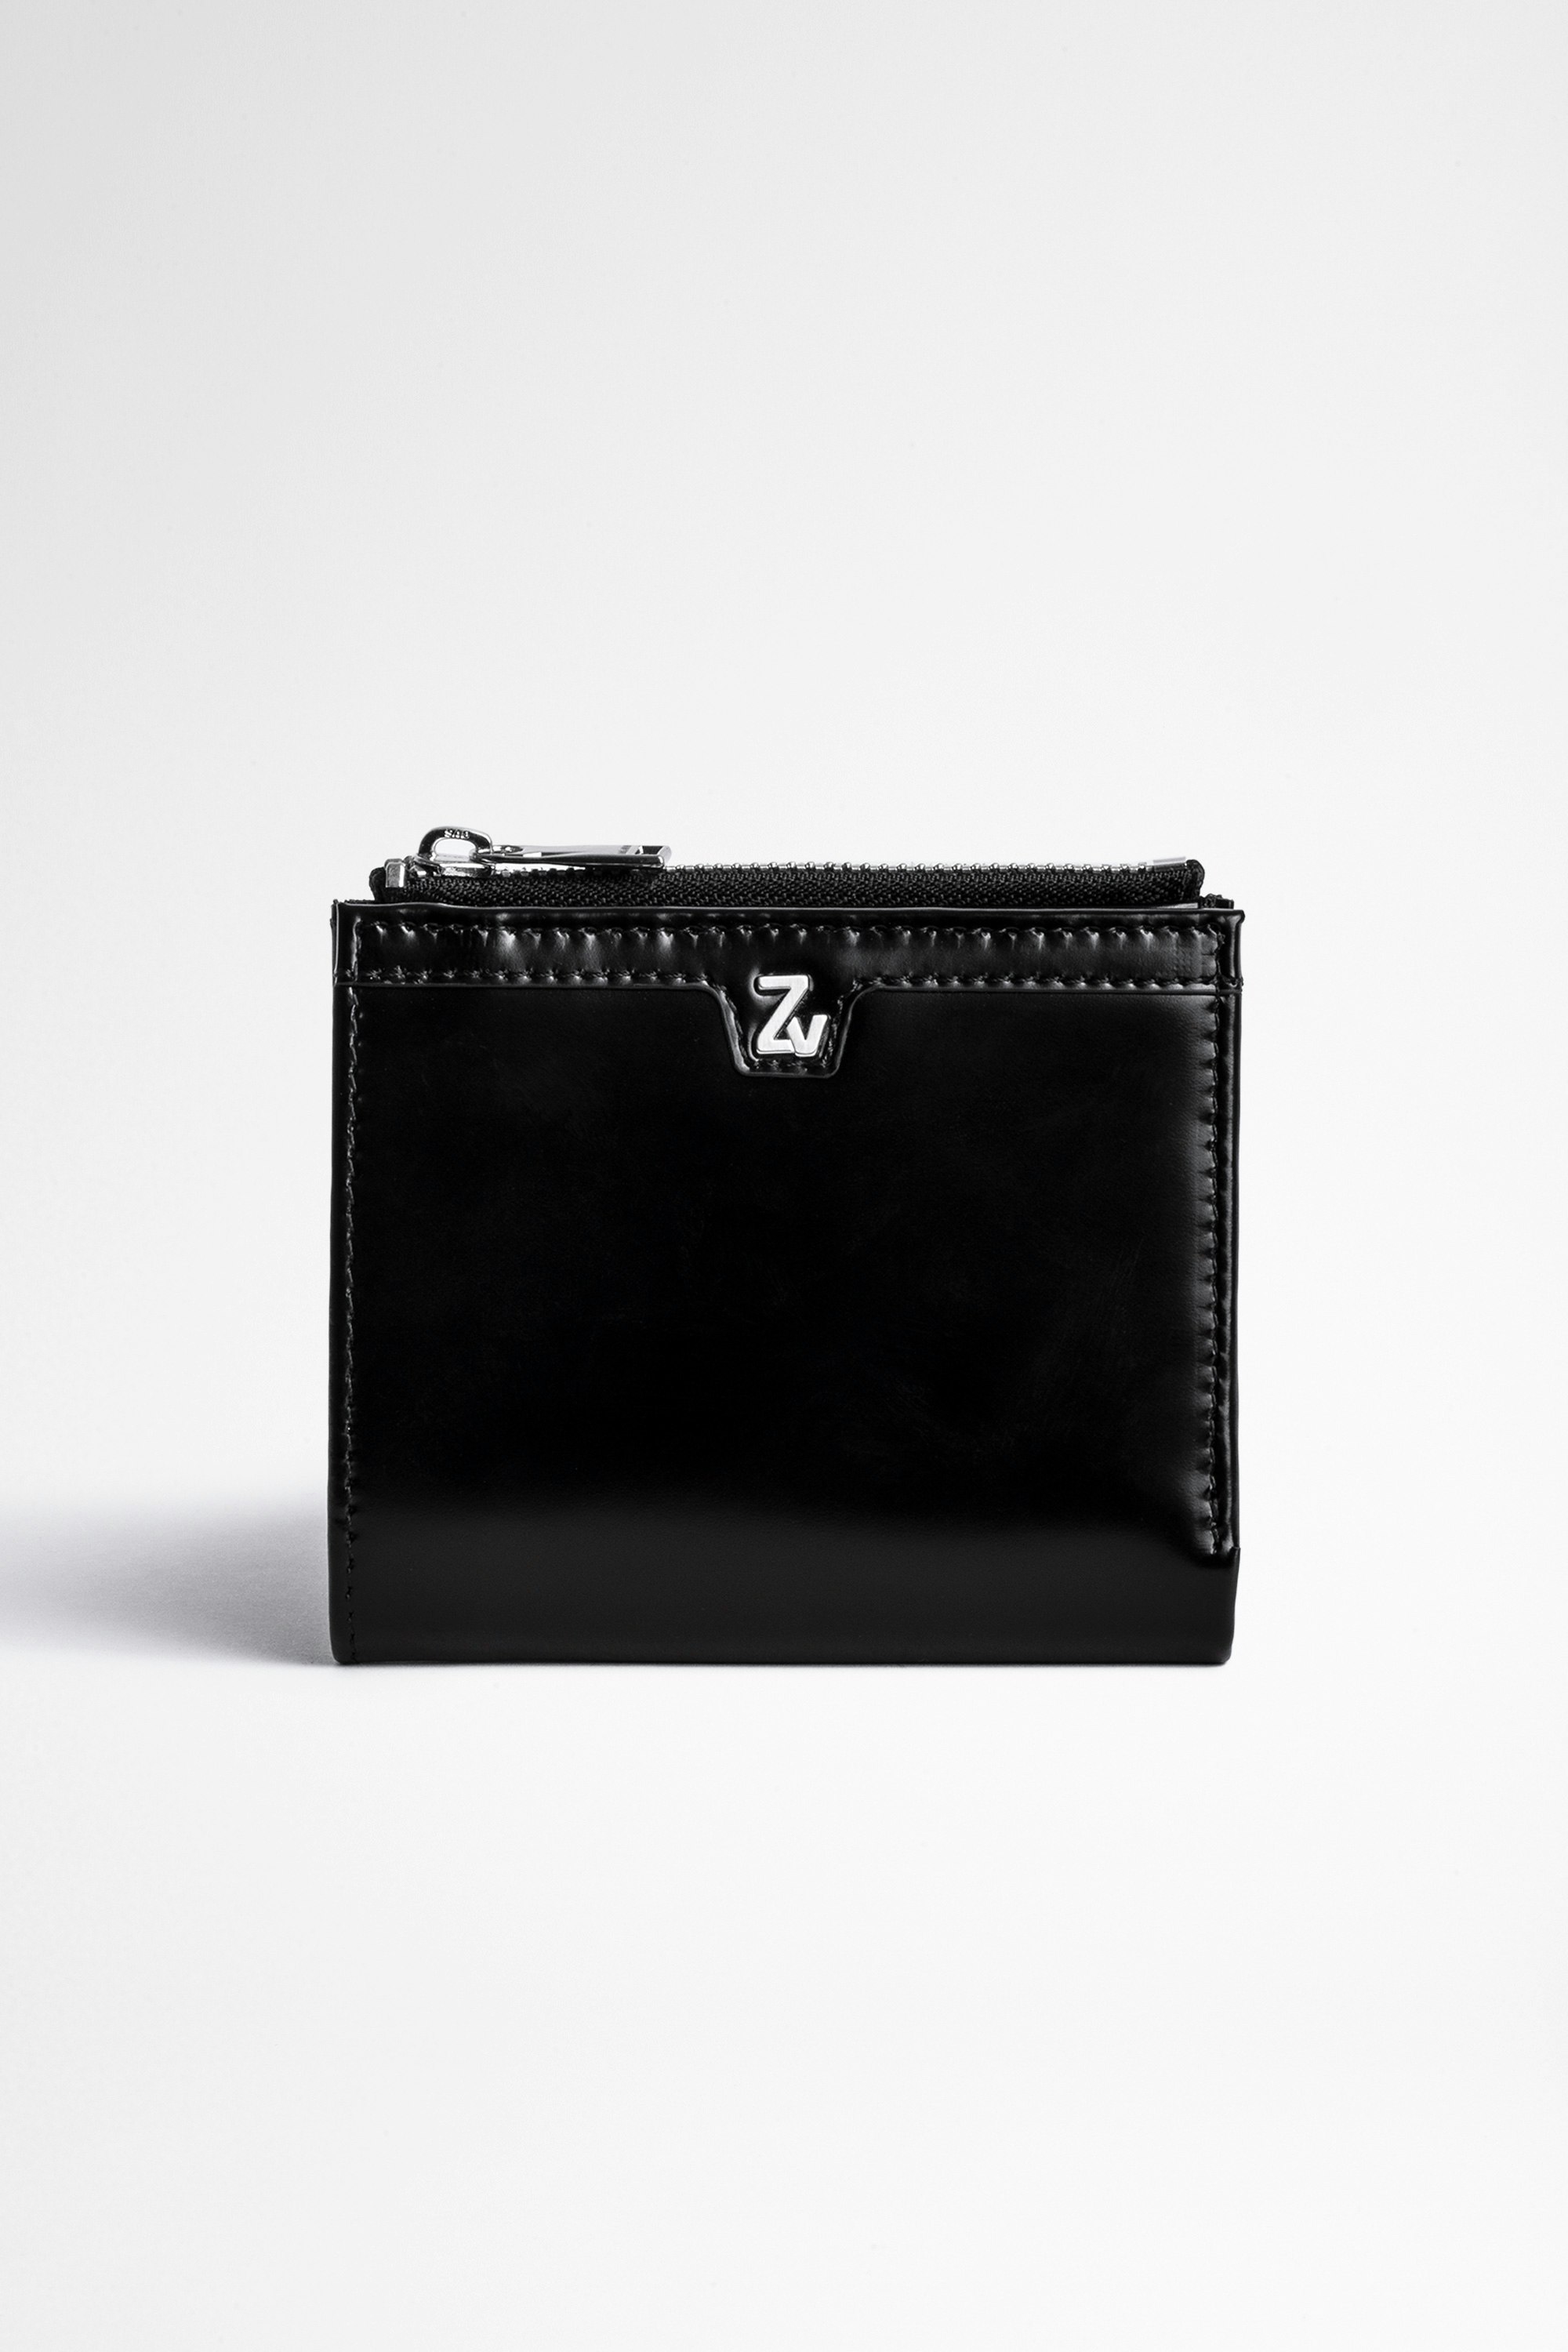 ZV Initiale Noam 財布 Men's black glossy leather card holder